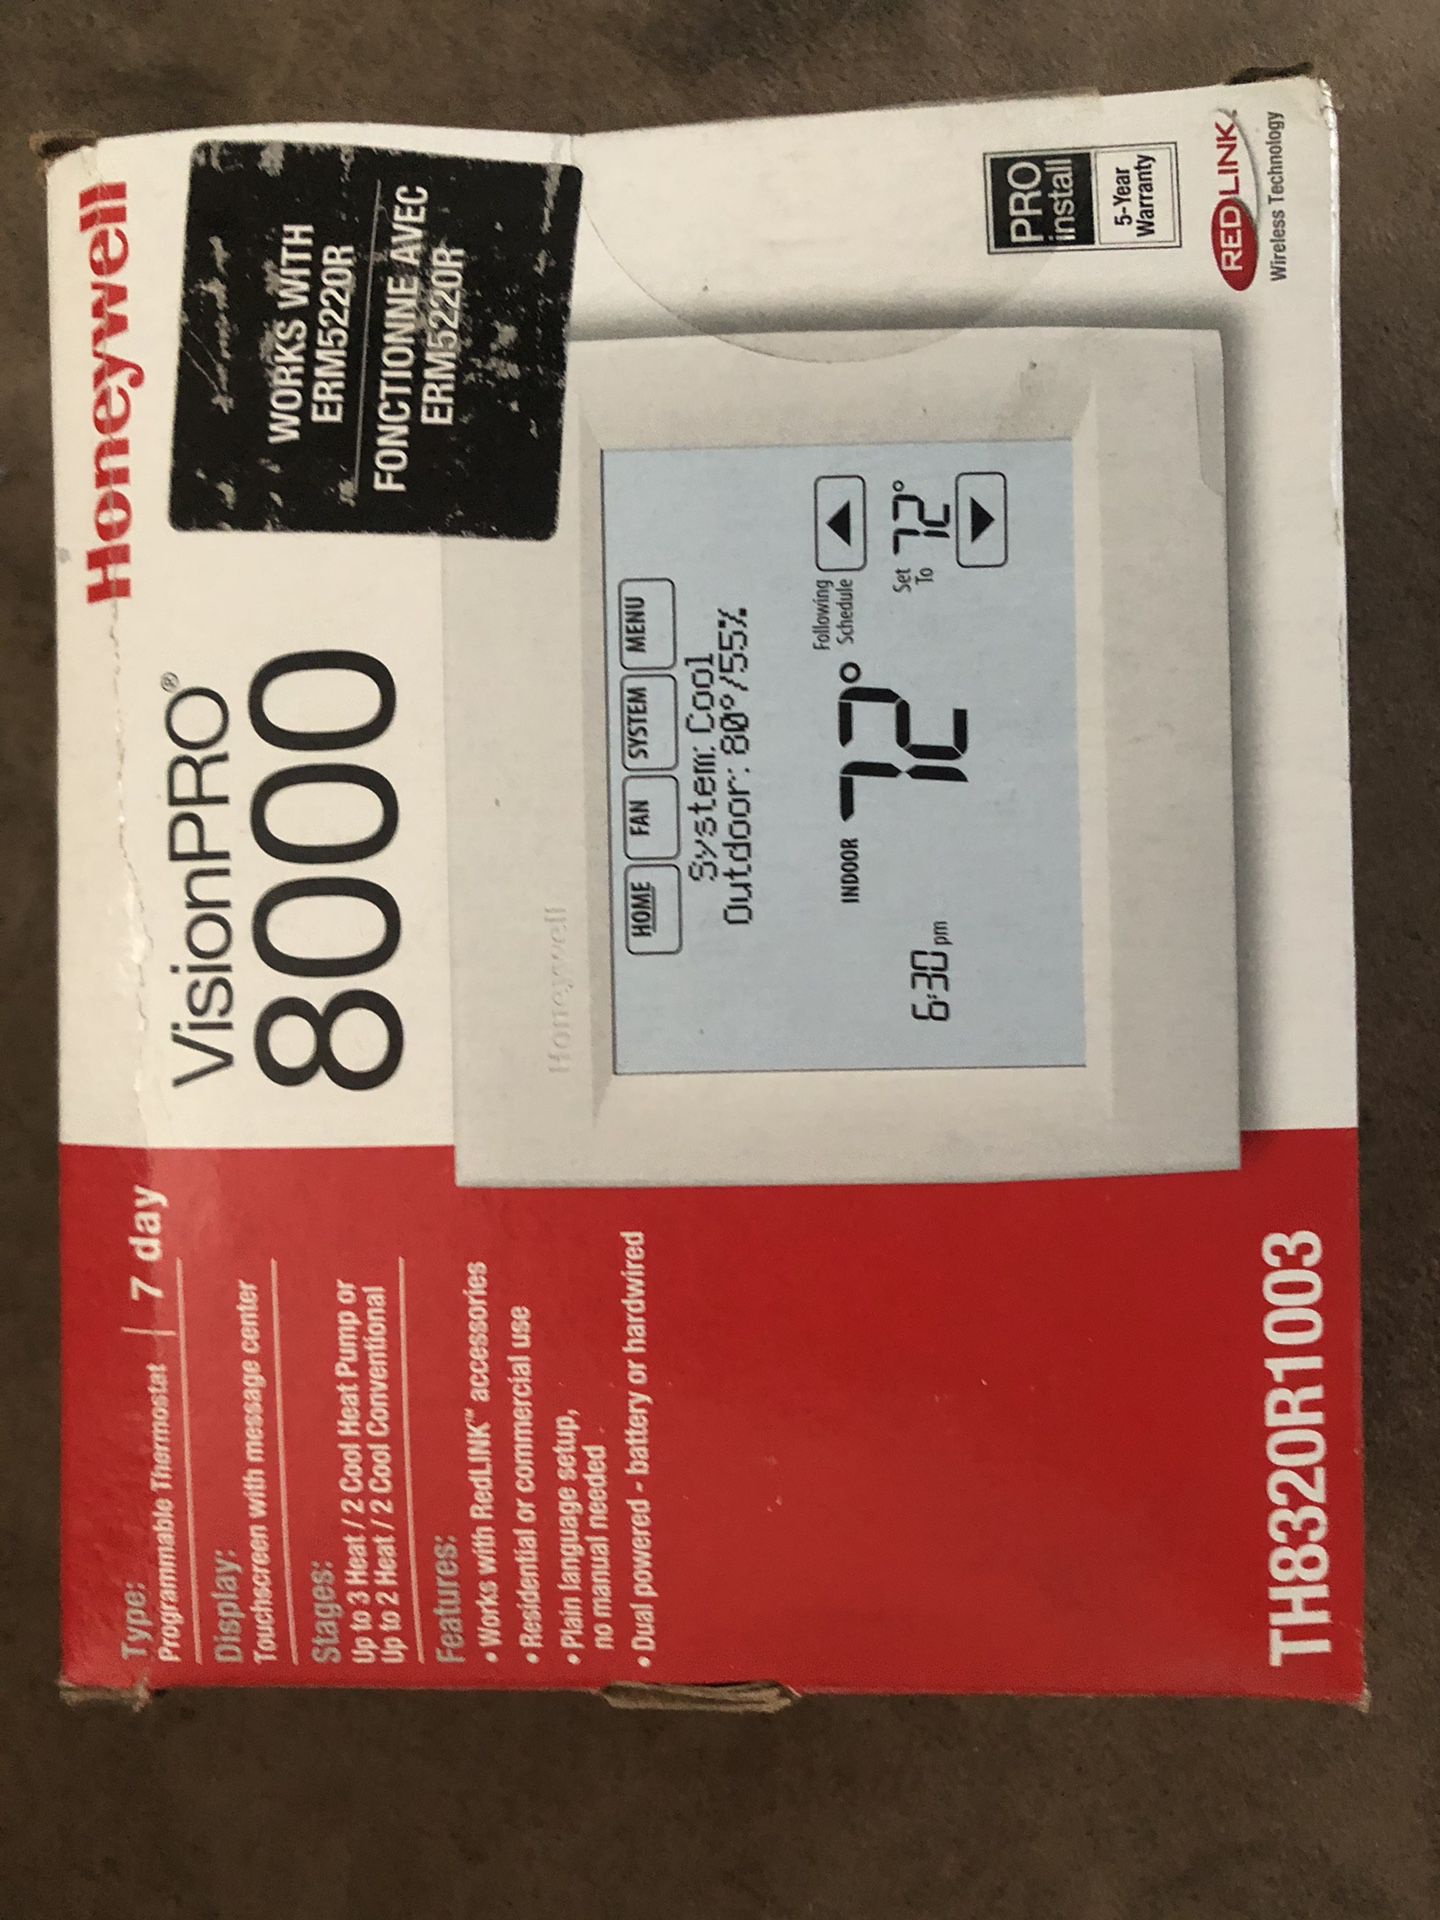 Honeywell vision Pro 8000 thermostat